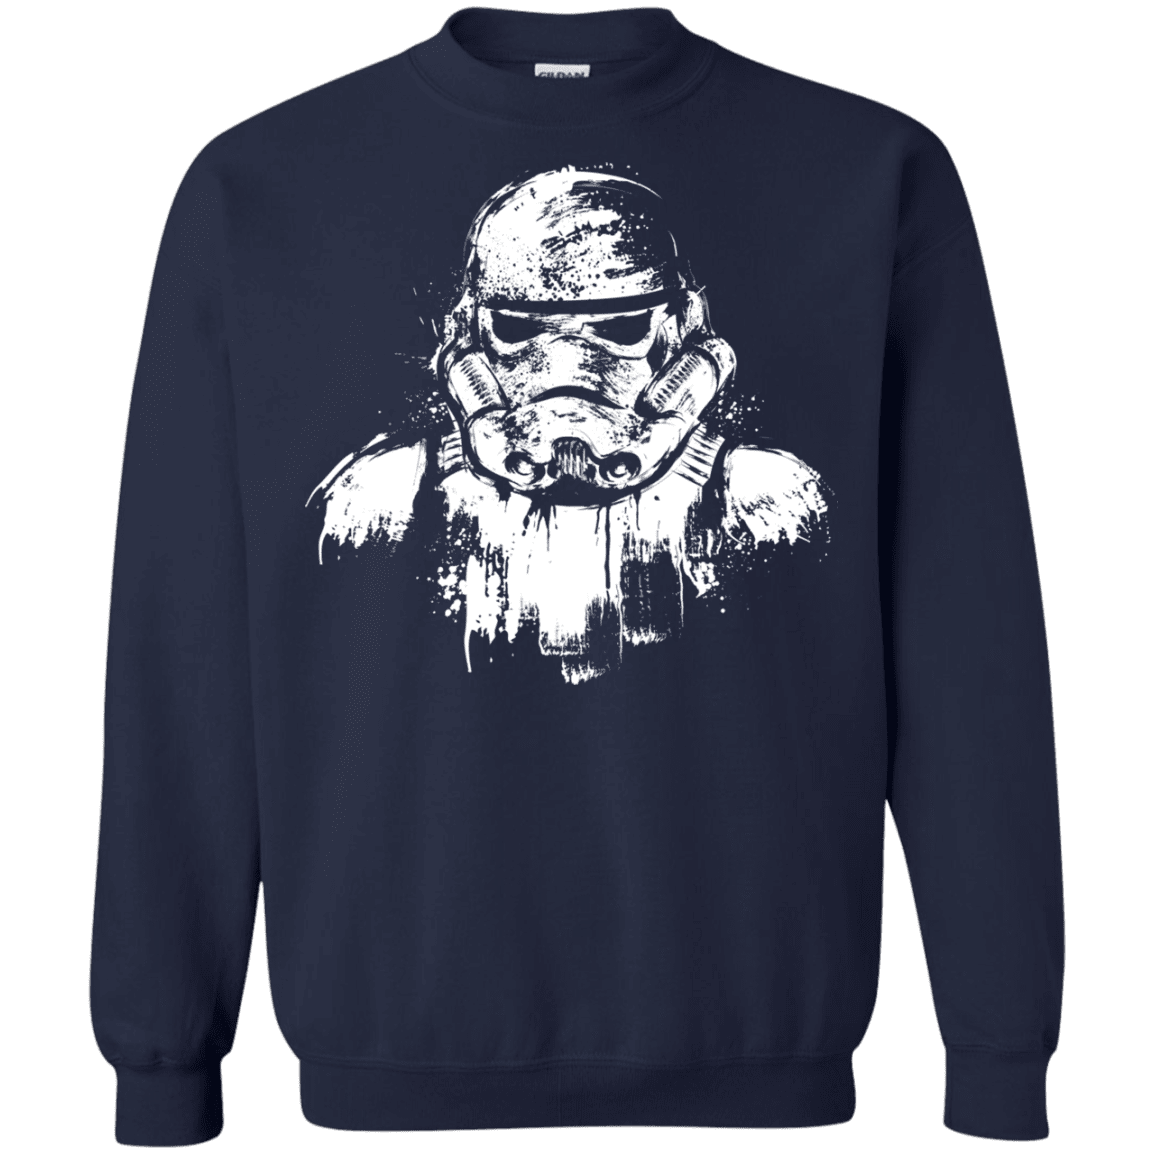 Sweatshirts Navy / Small STORMTROOPER ARMOR Crewneck Sweatshirt